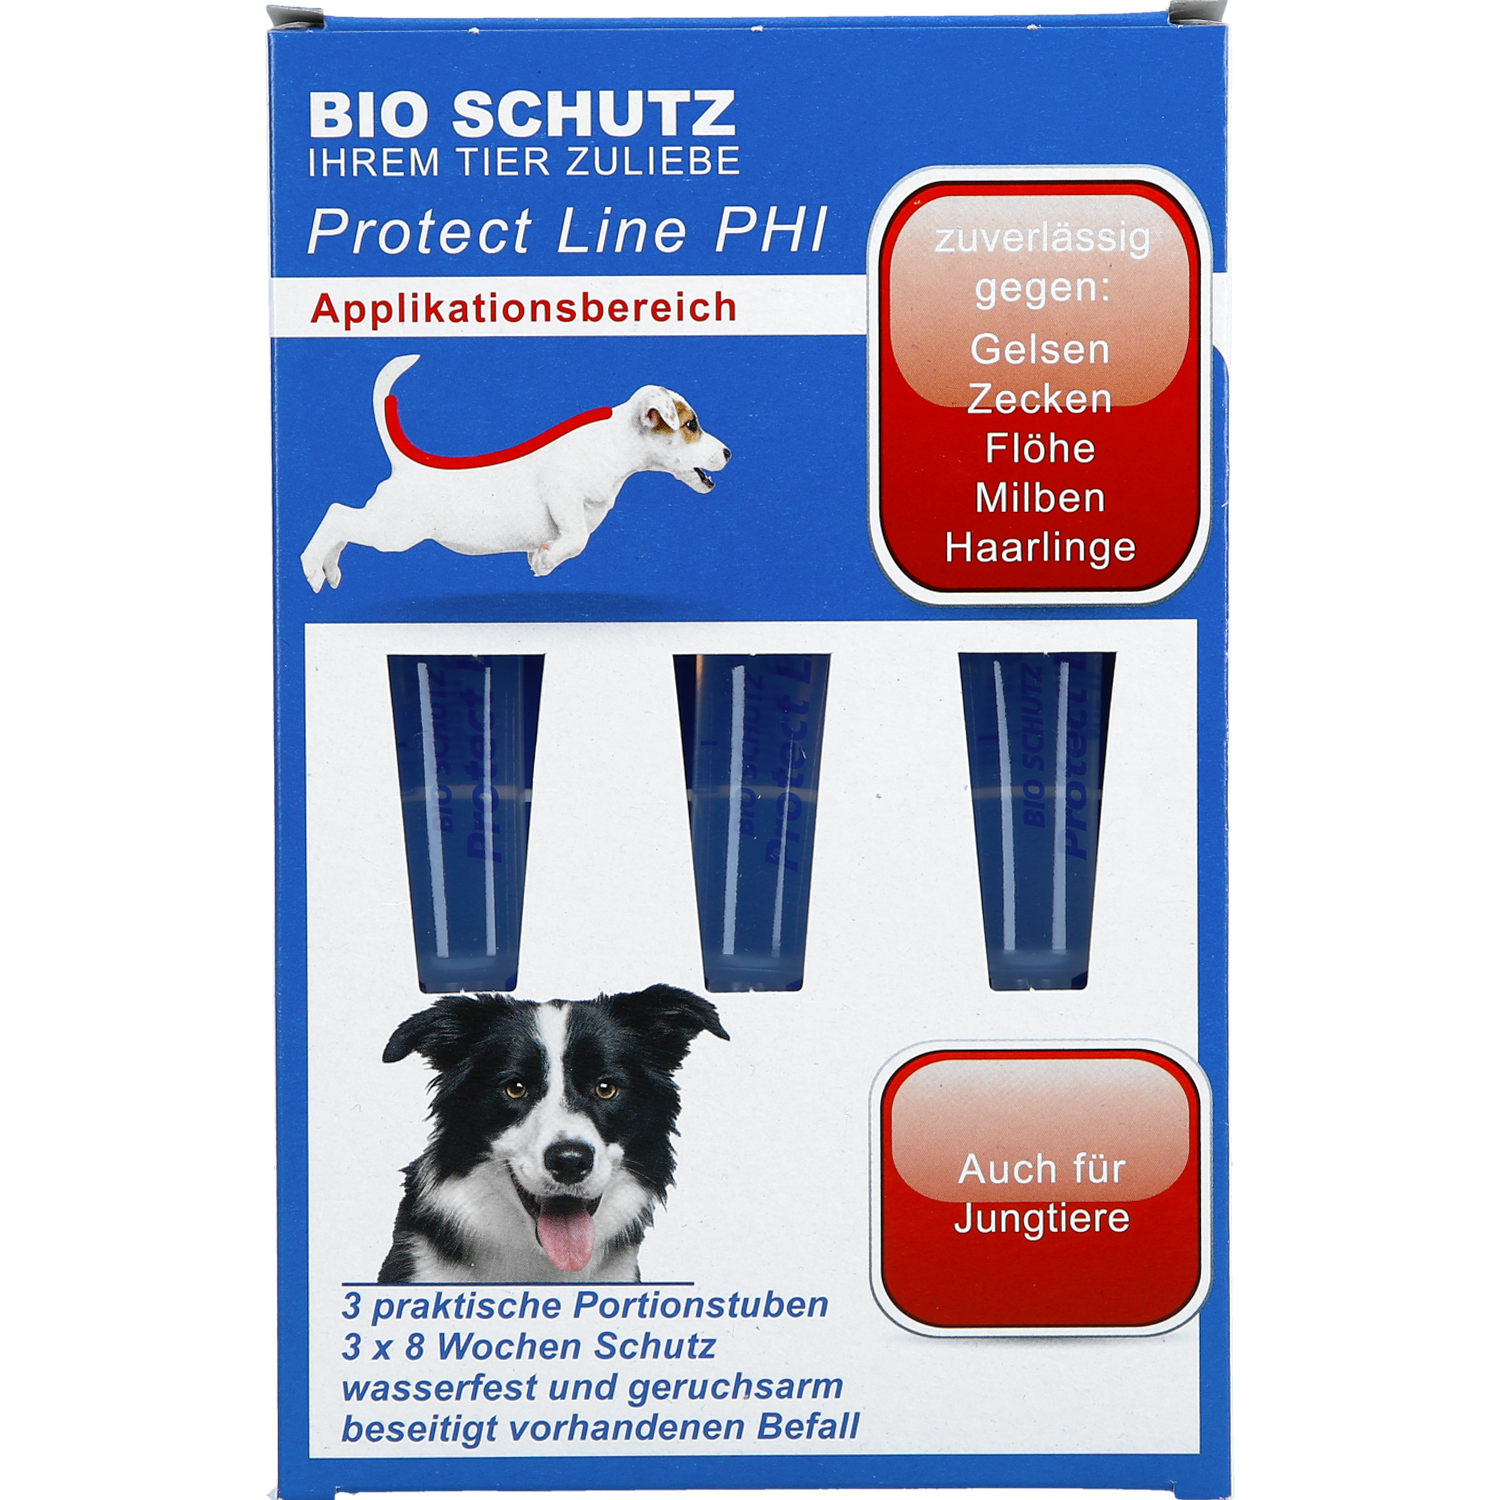 BIO SCHUTZ PROTECT LINE PHI für Hunde